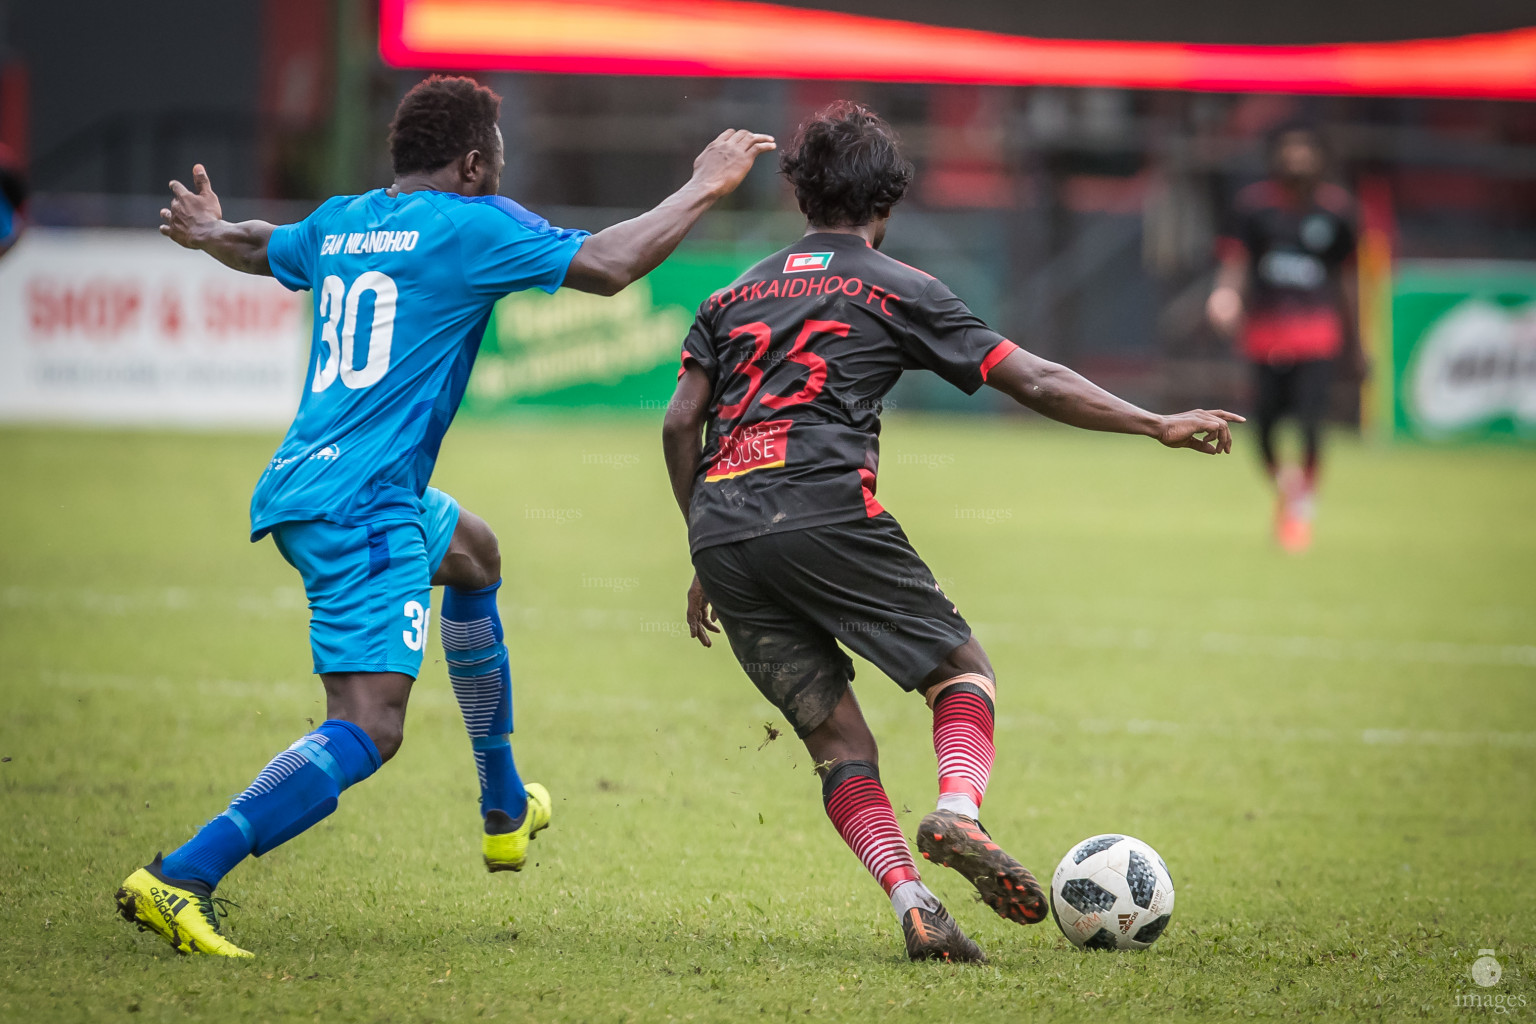 Dhiraagu Dhivehi Premier League 2018 - Nilandhoo vs Foakaidhoo in Male, Maldives, Thursday November 29, 2018. (Images.mv Photo/ Ismail Thoriq)